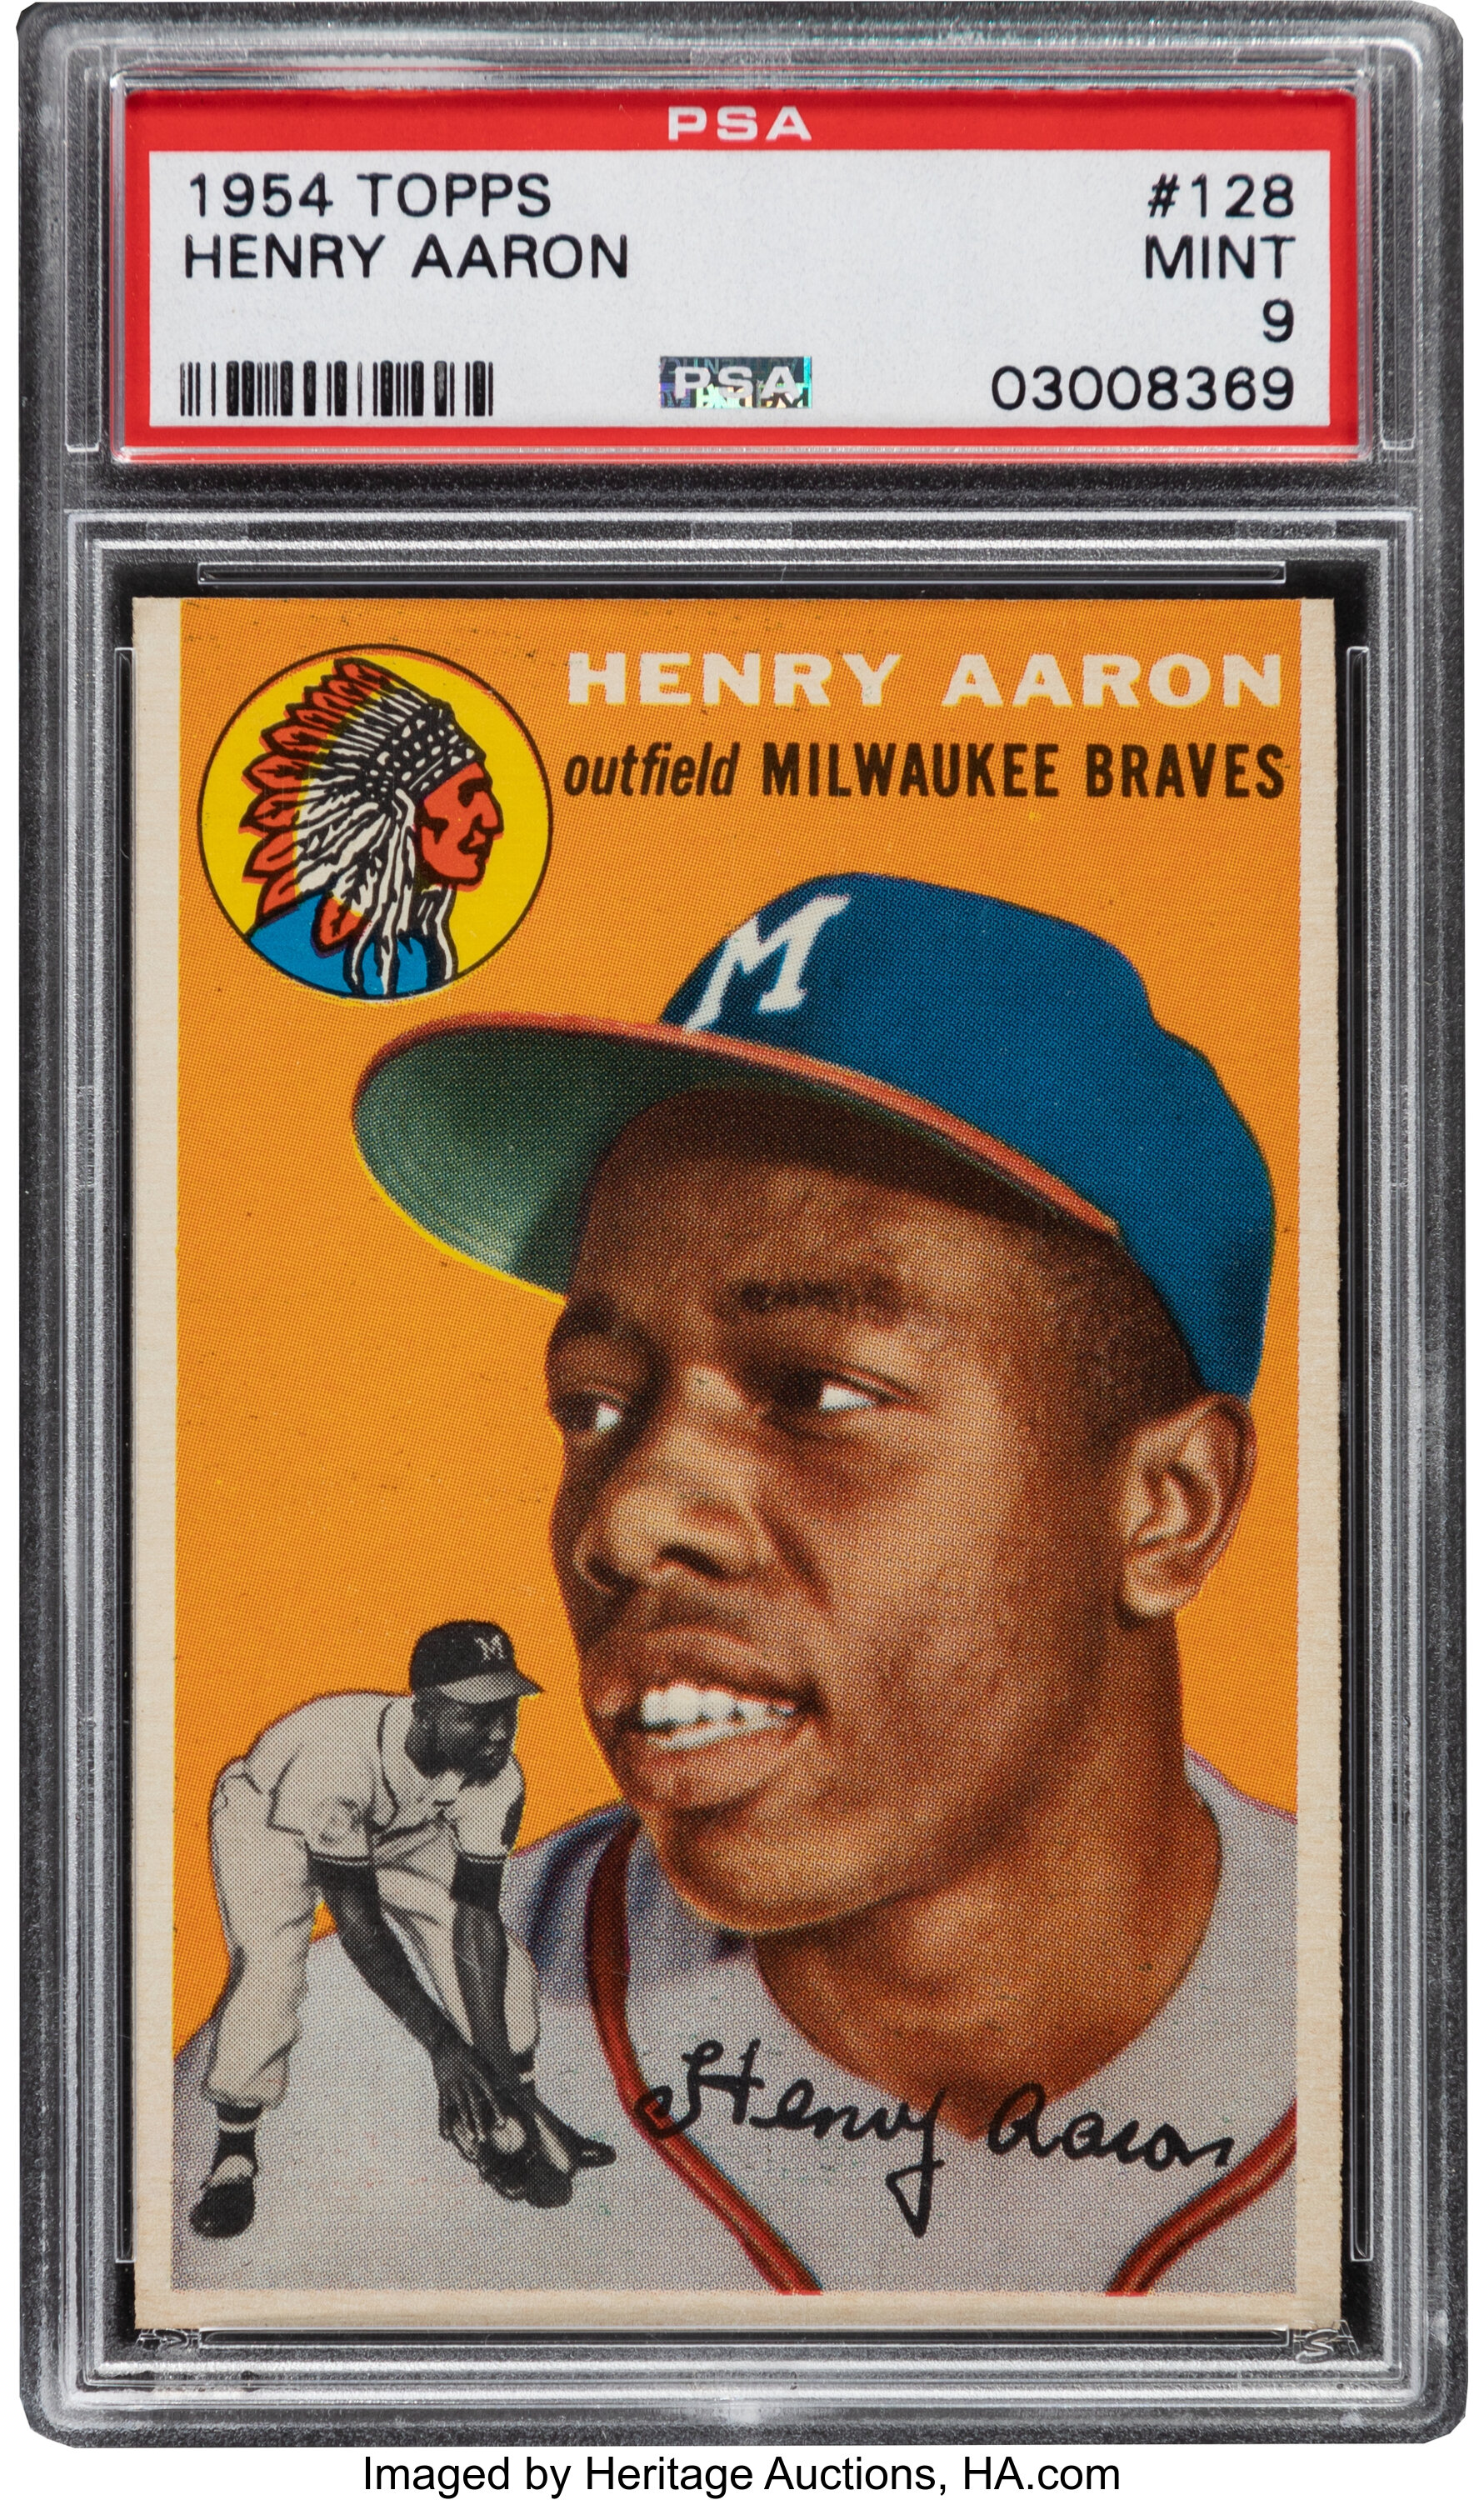 At Auction: 1965 Old London Hank Aaron Milwaukee Braves Baseball Coin